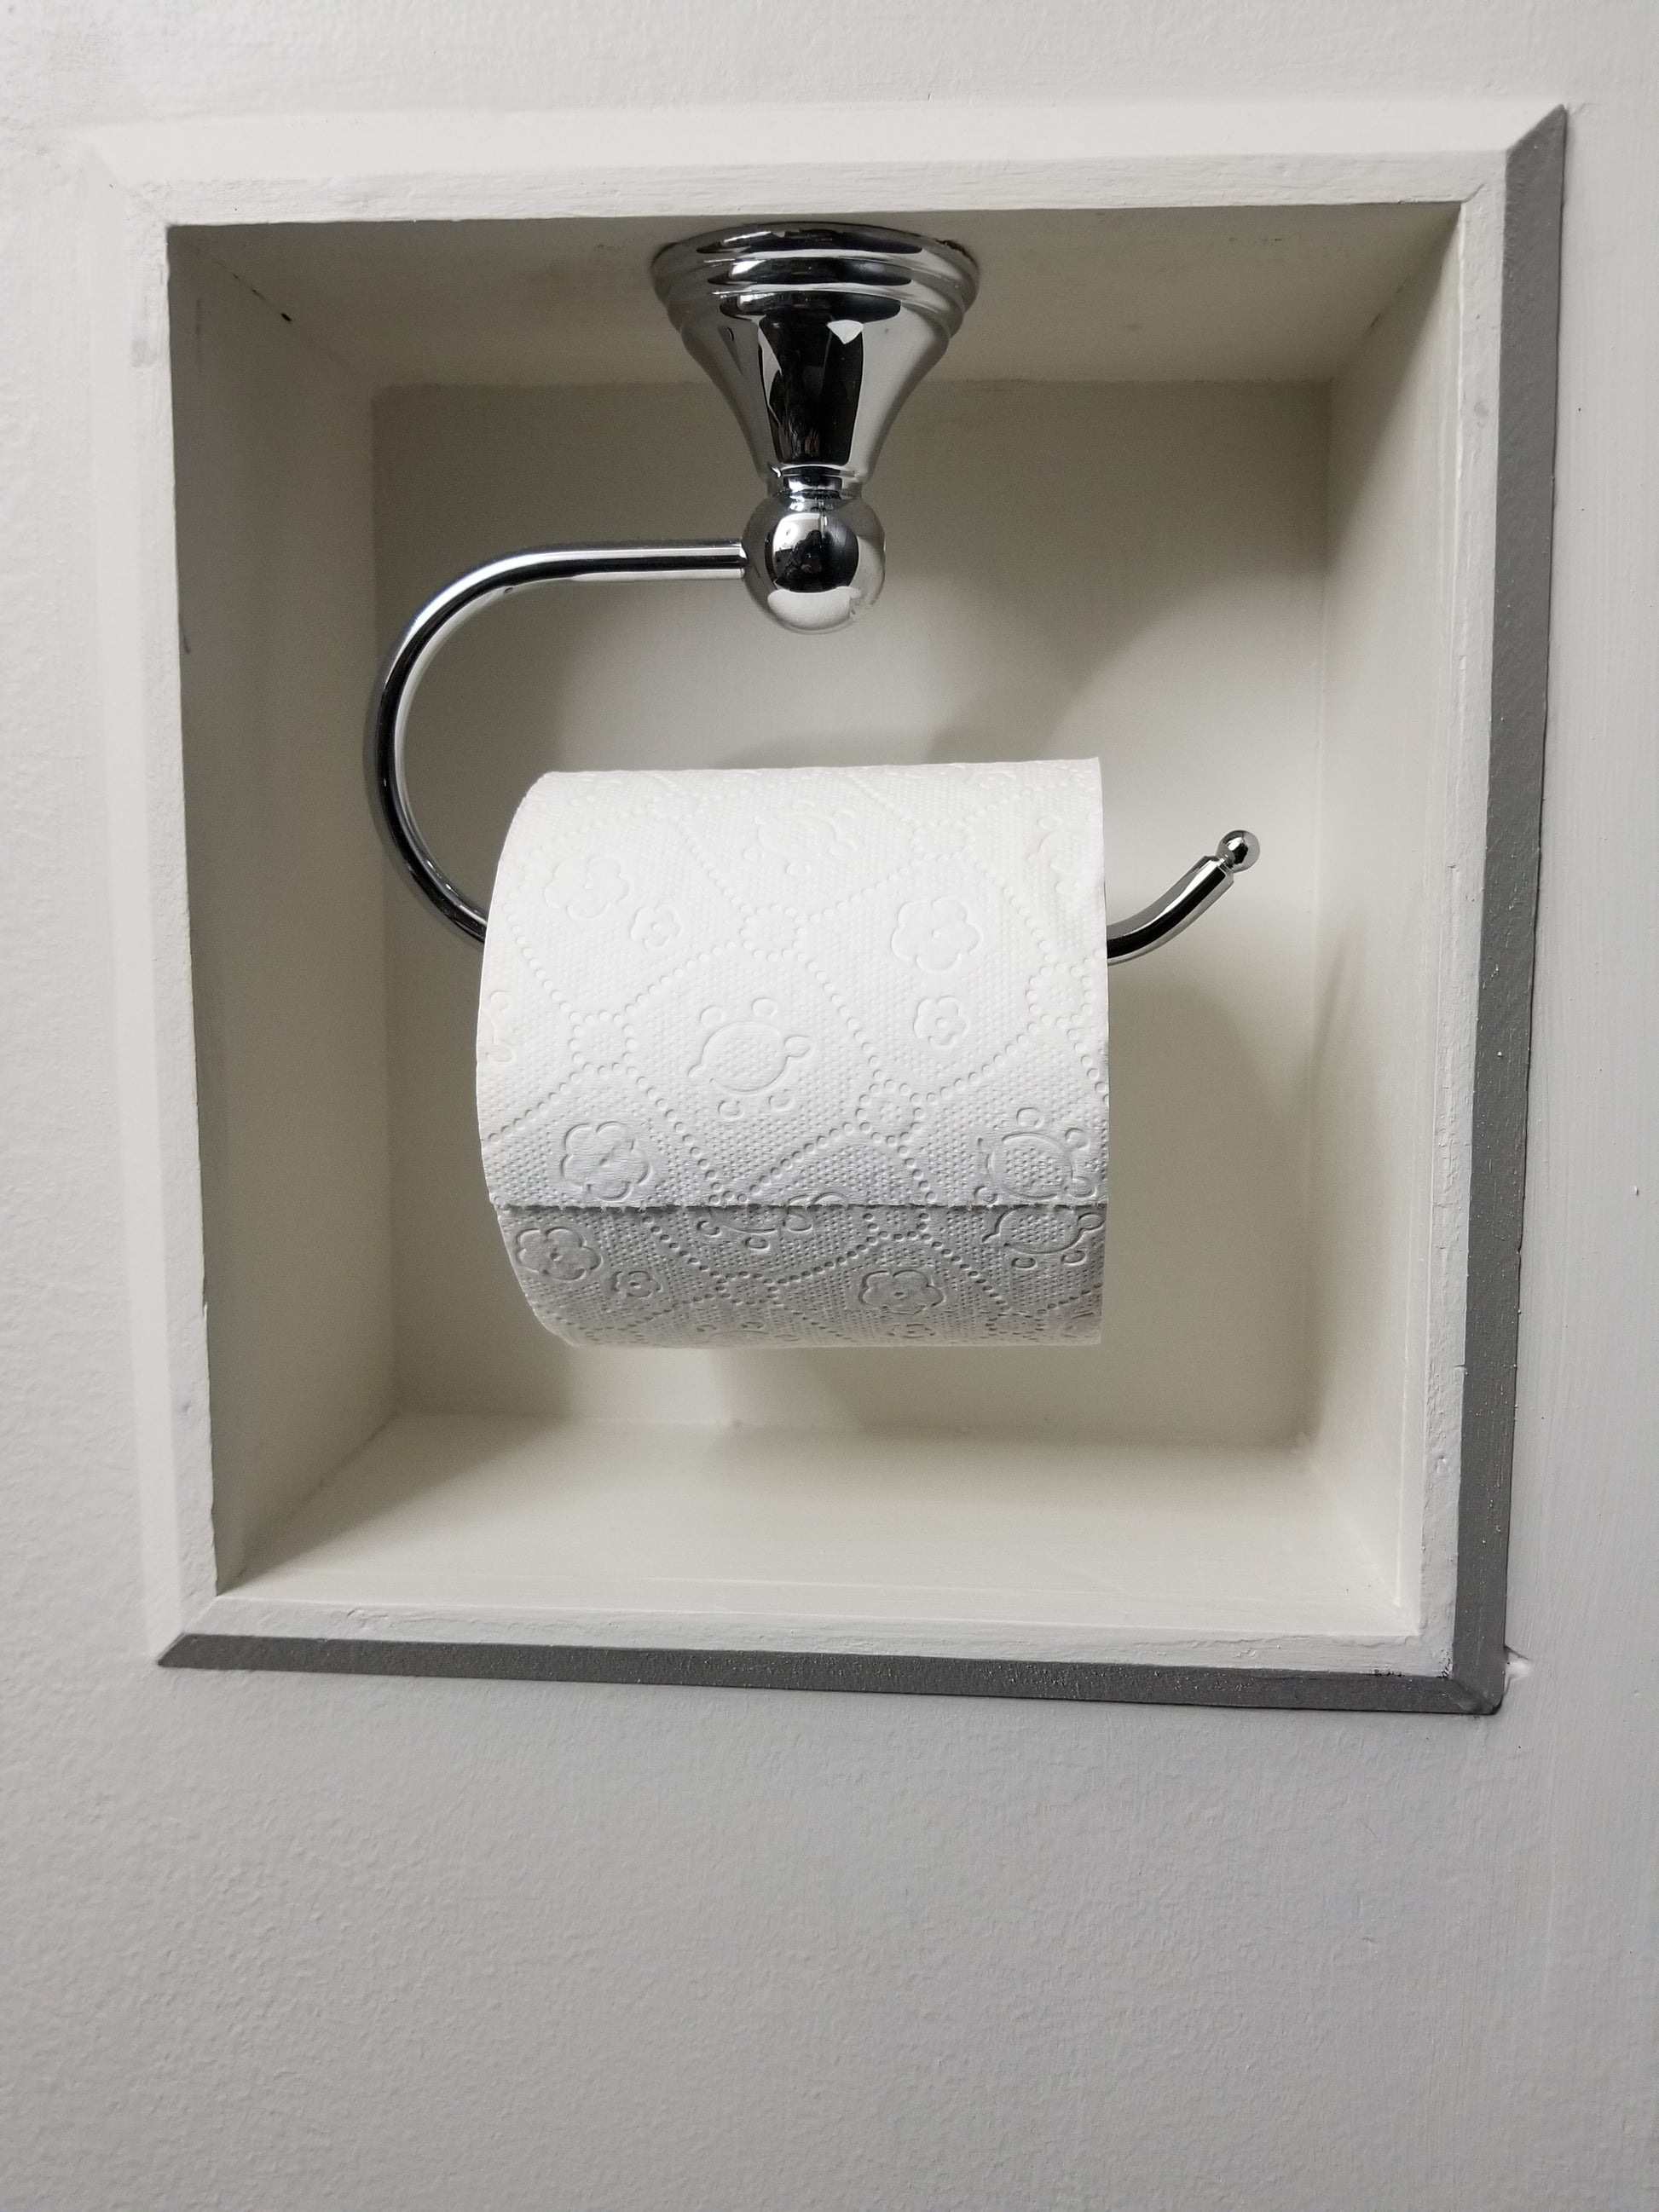 Recessed Toilet Paper Holder in Matte Black